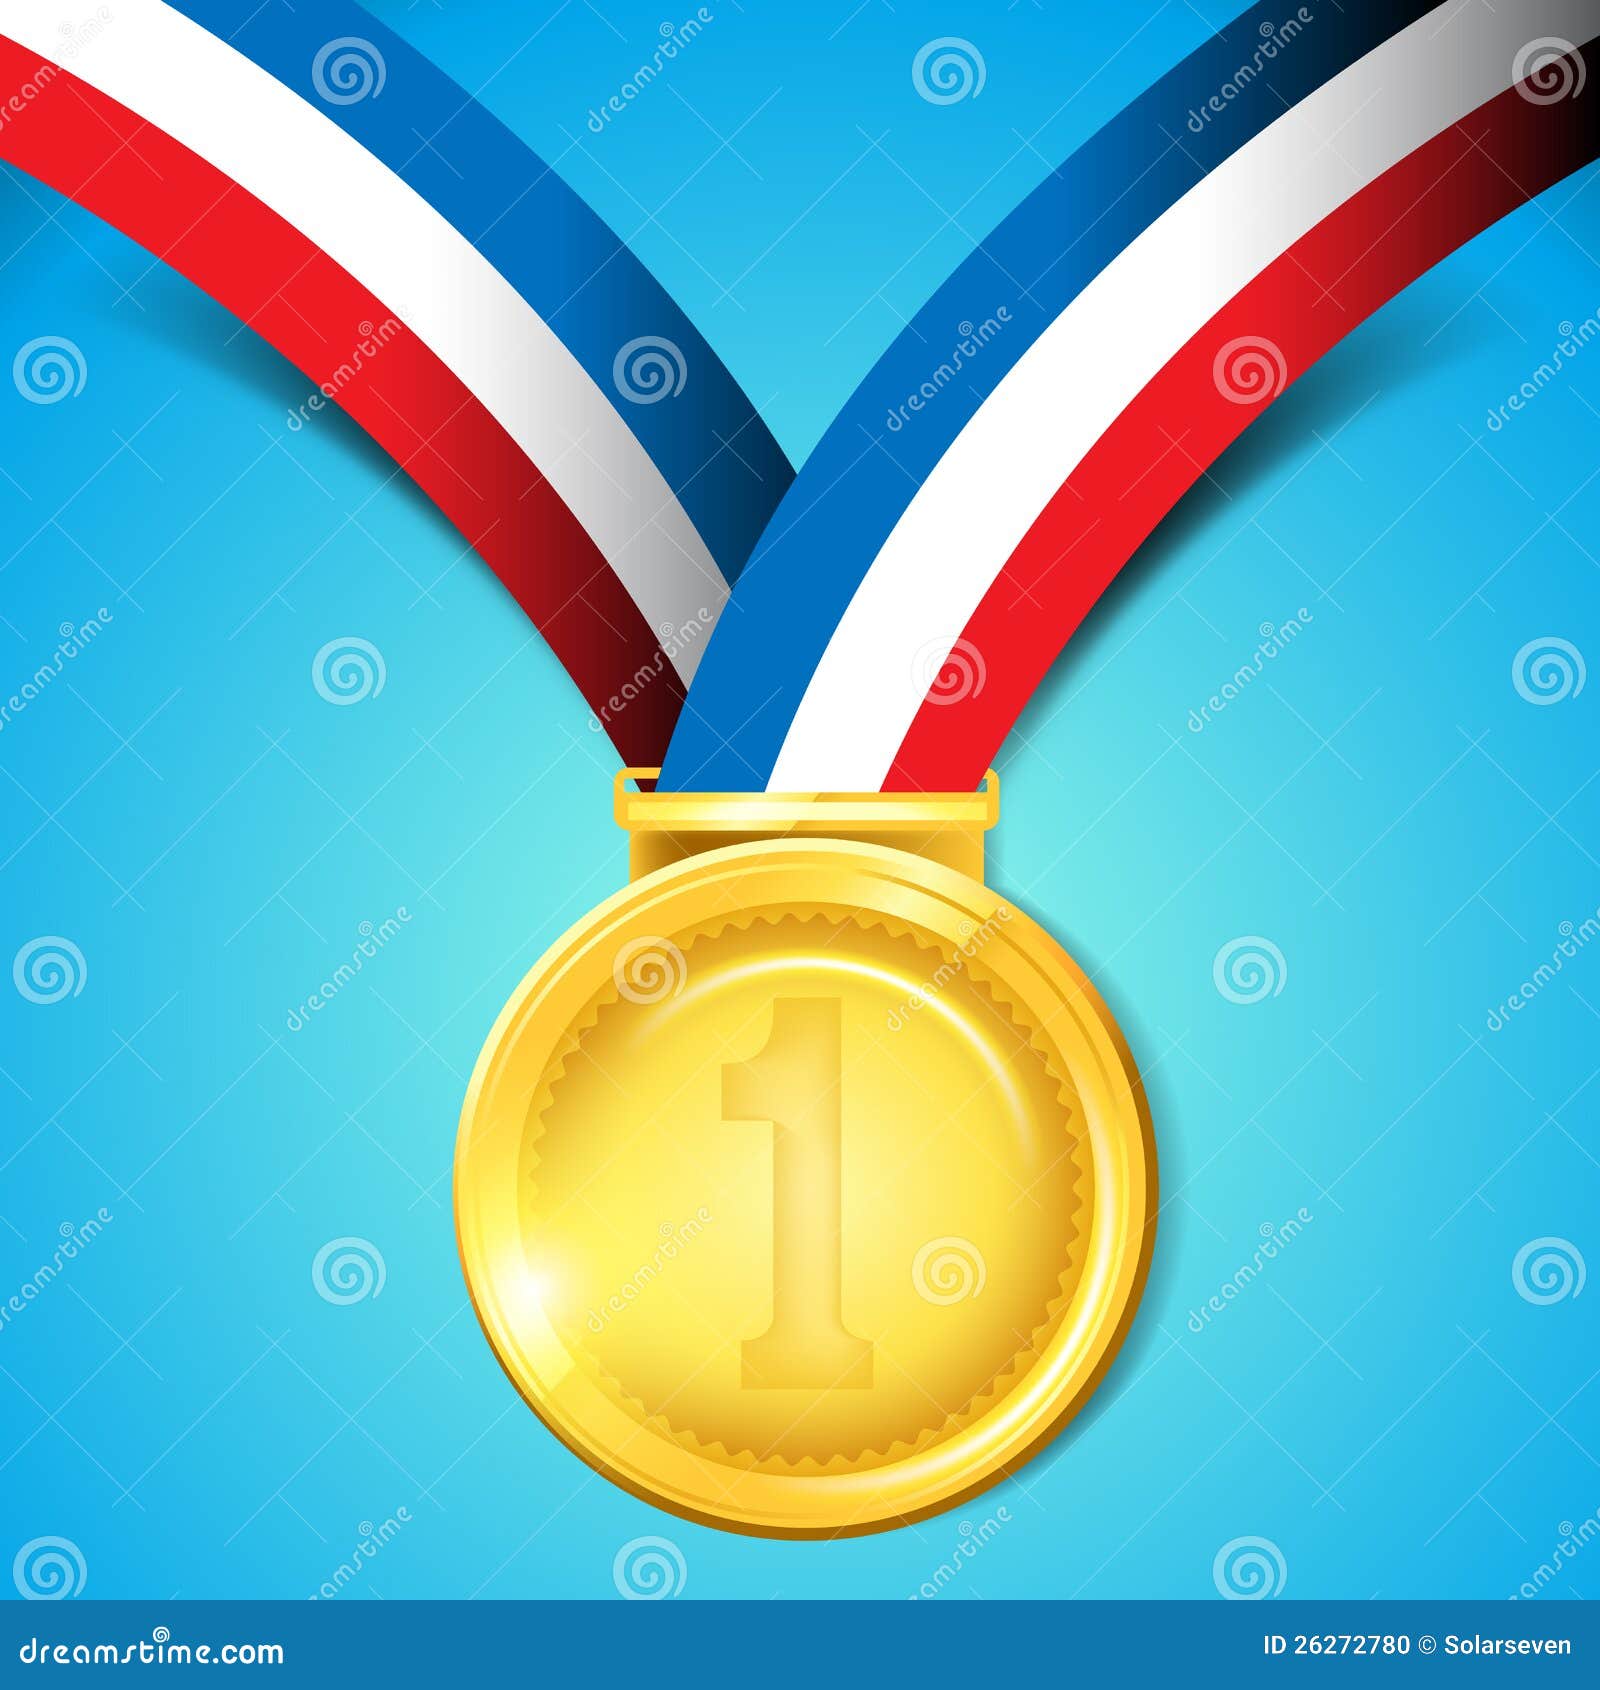 number one gold medal